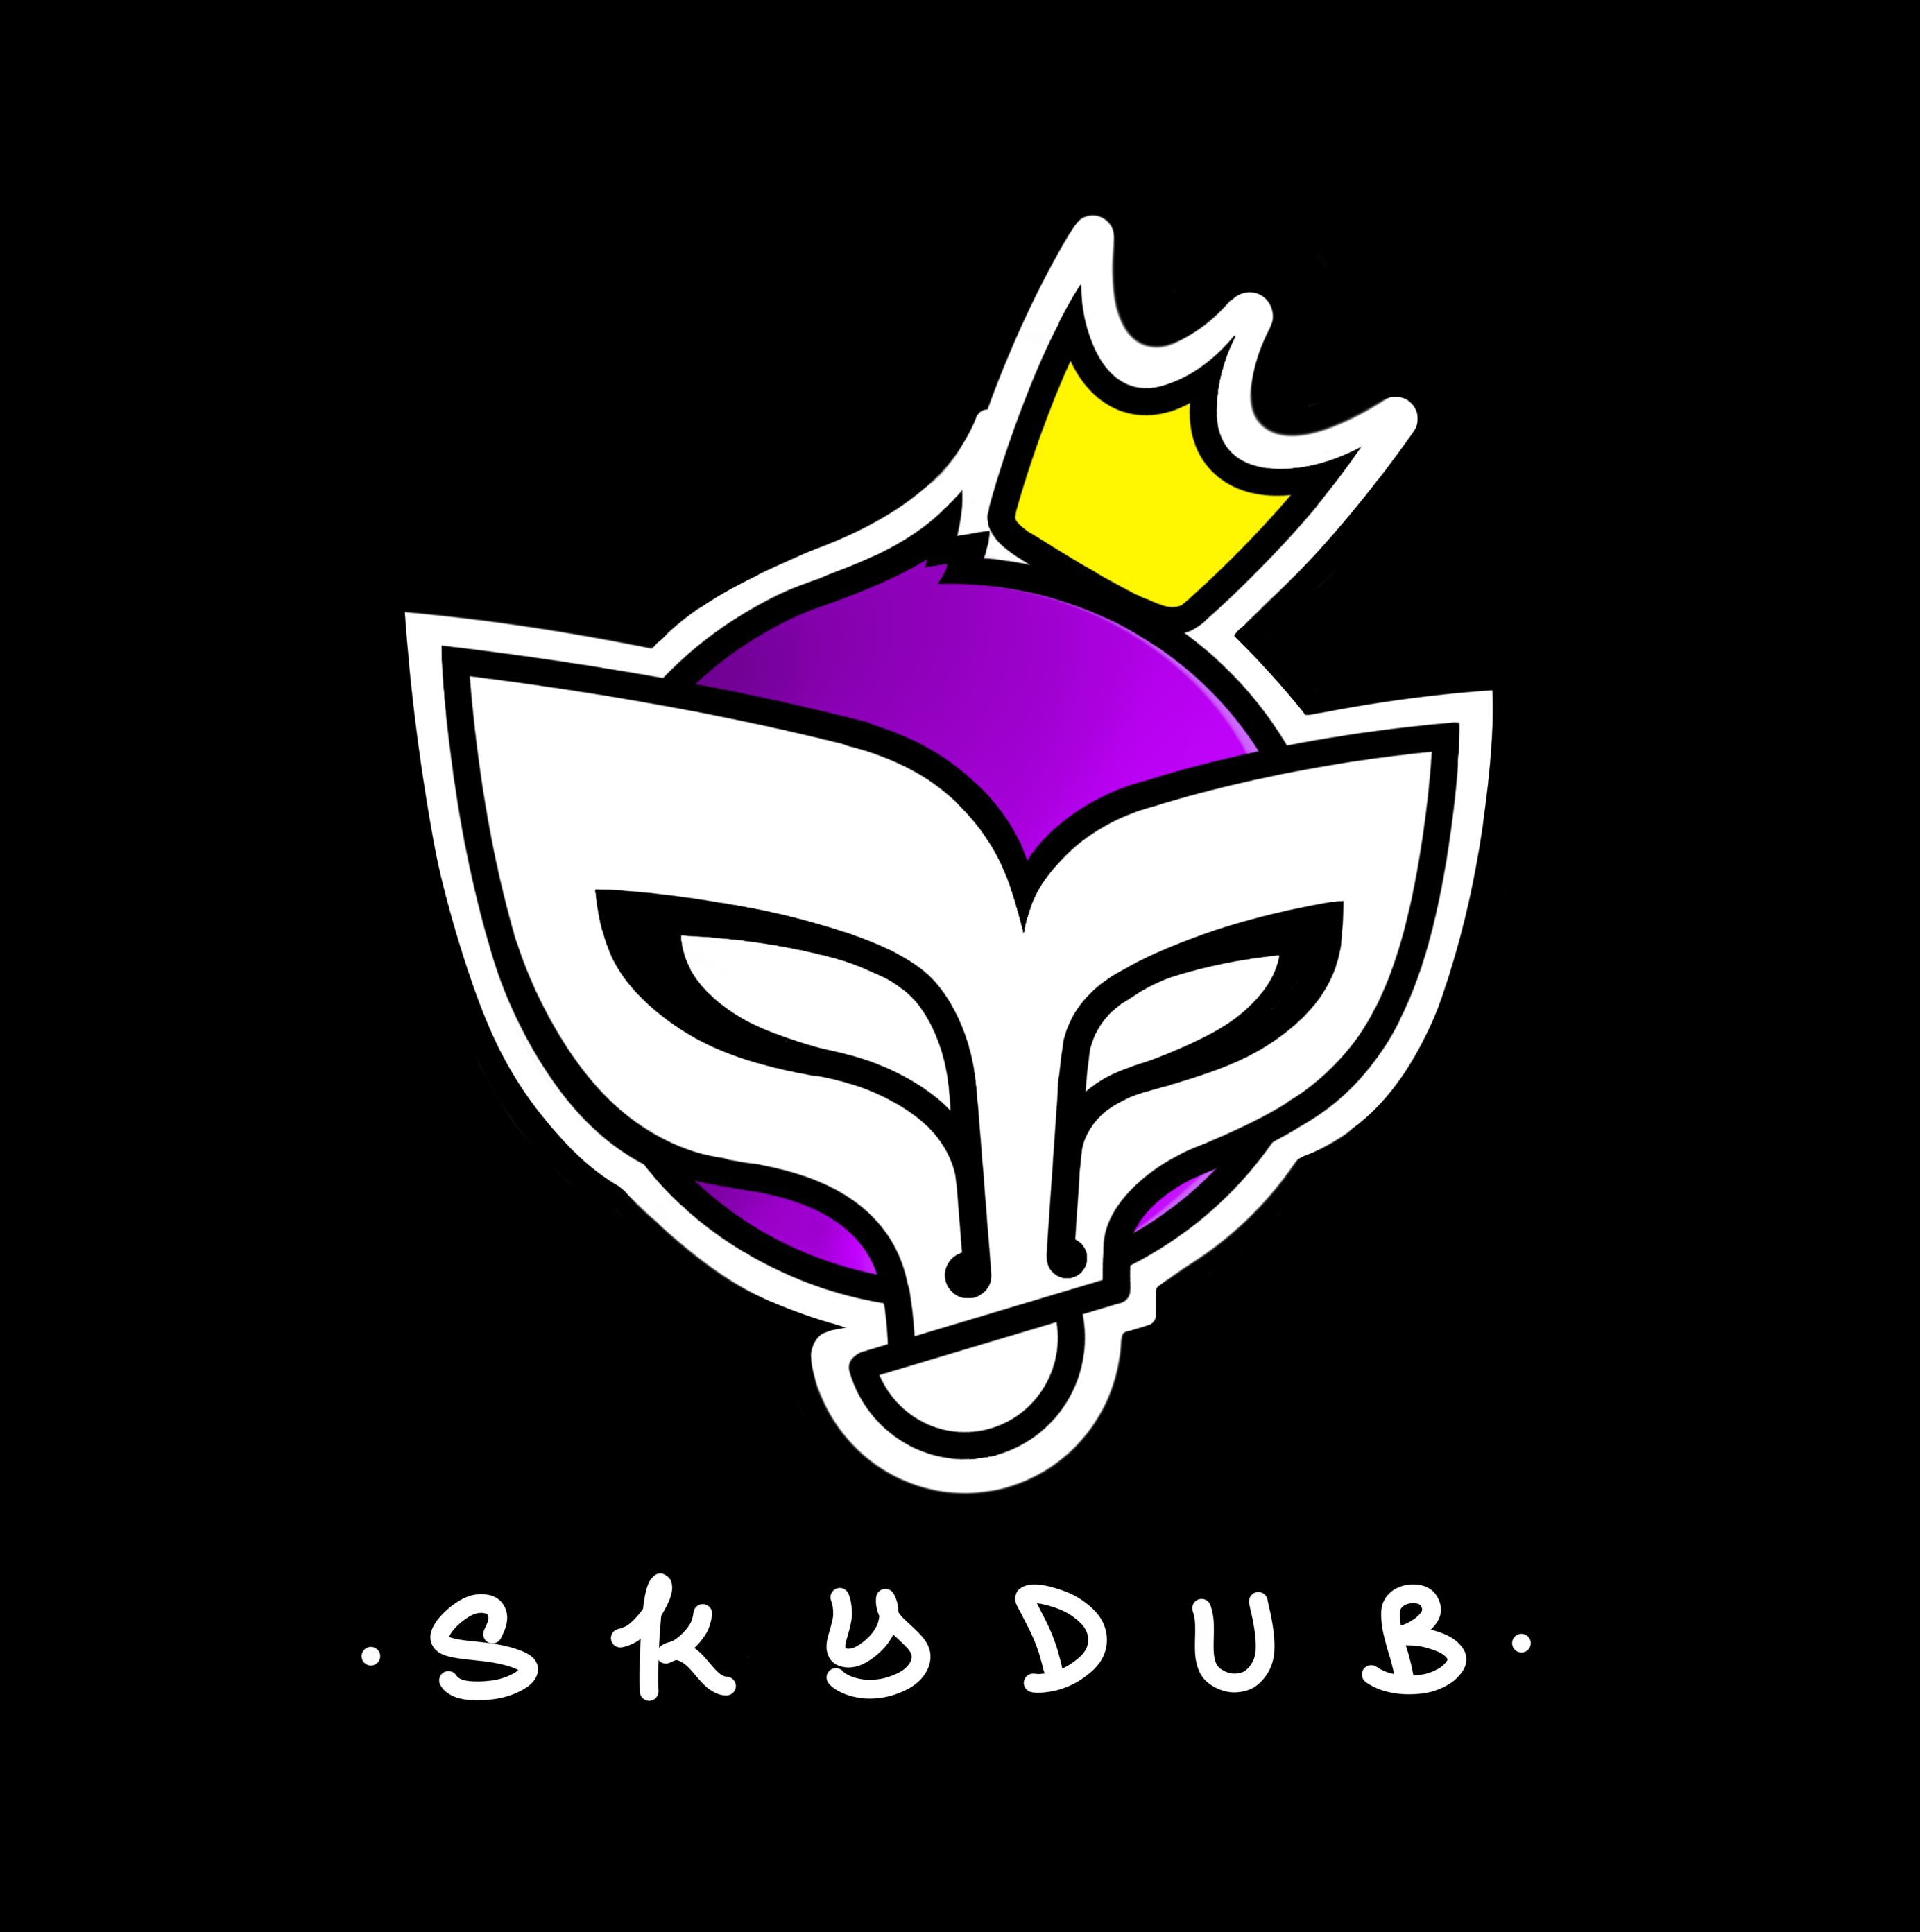 Skydub's profile